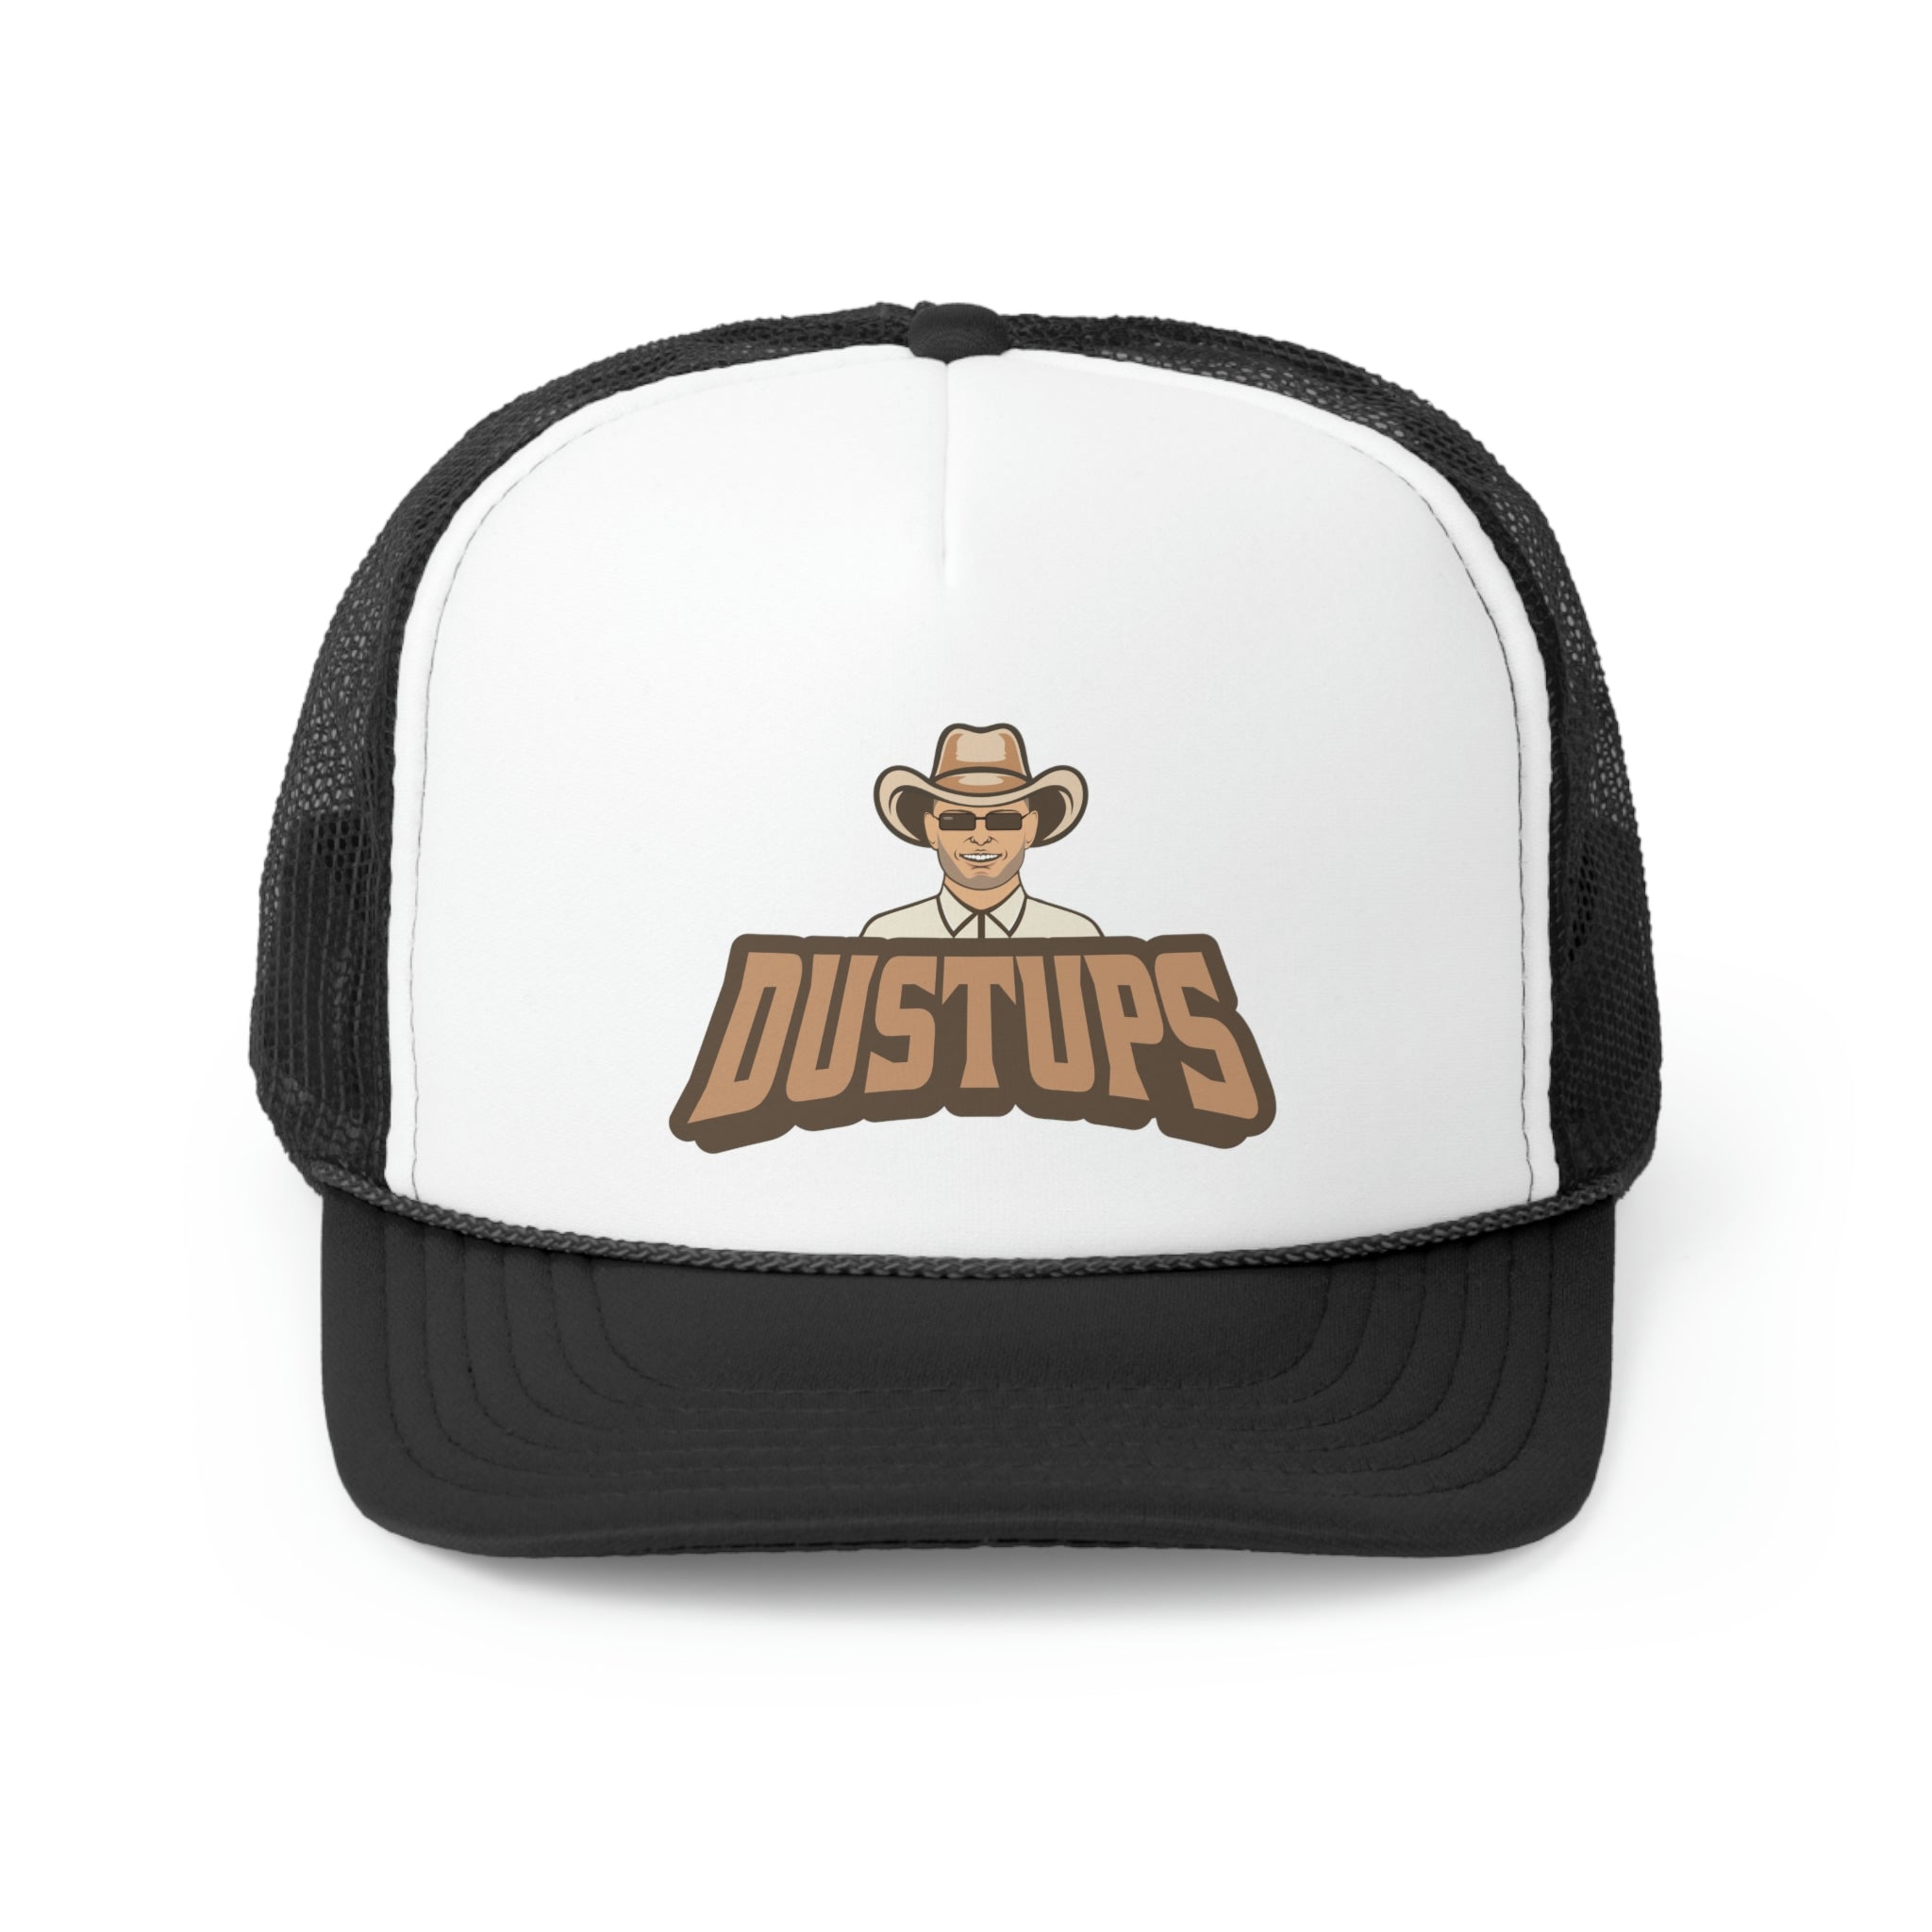 Shaun Dustups Trucker Caps